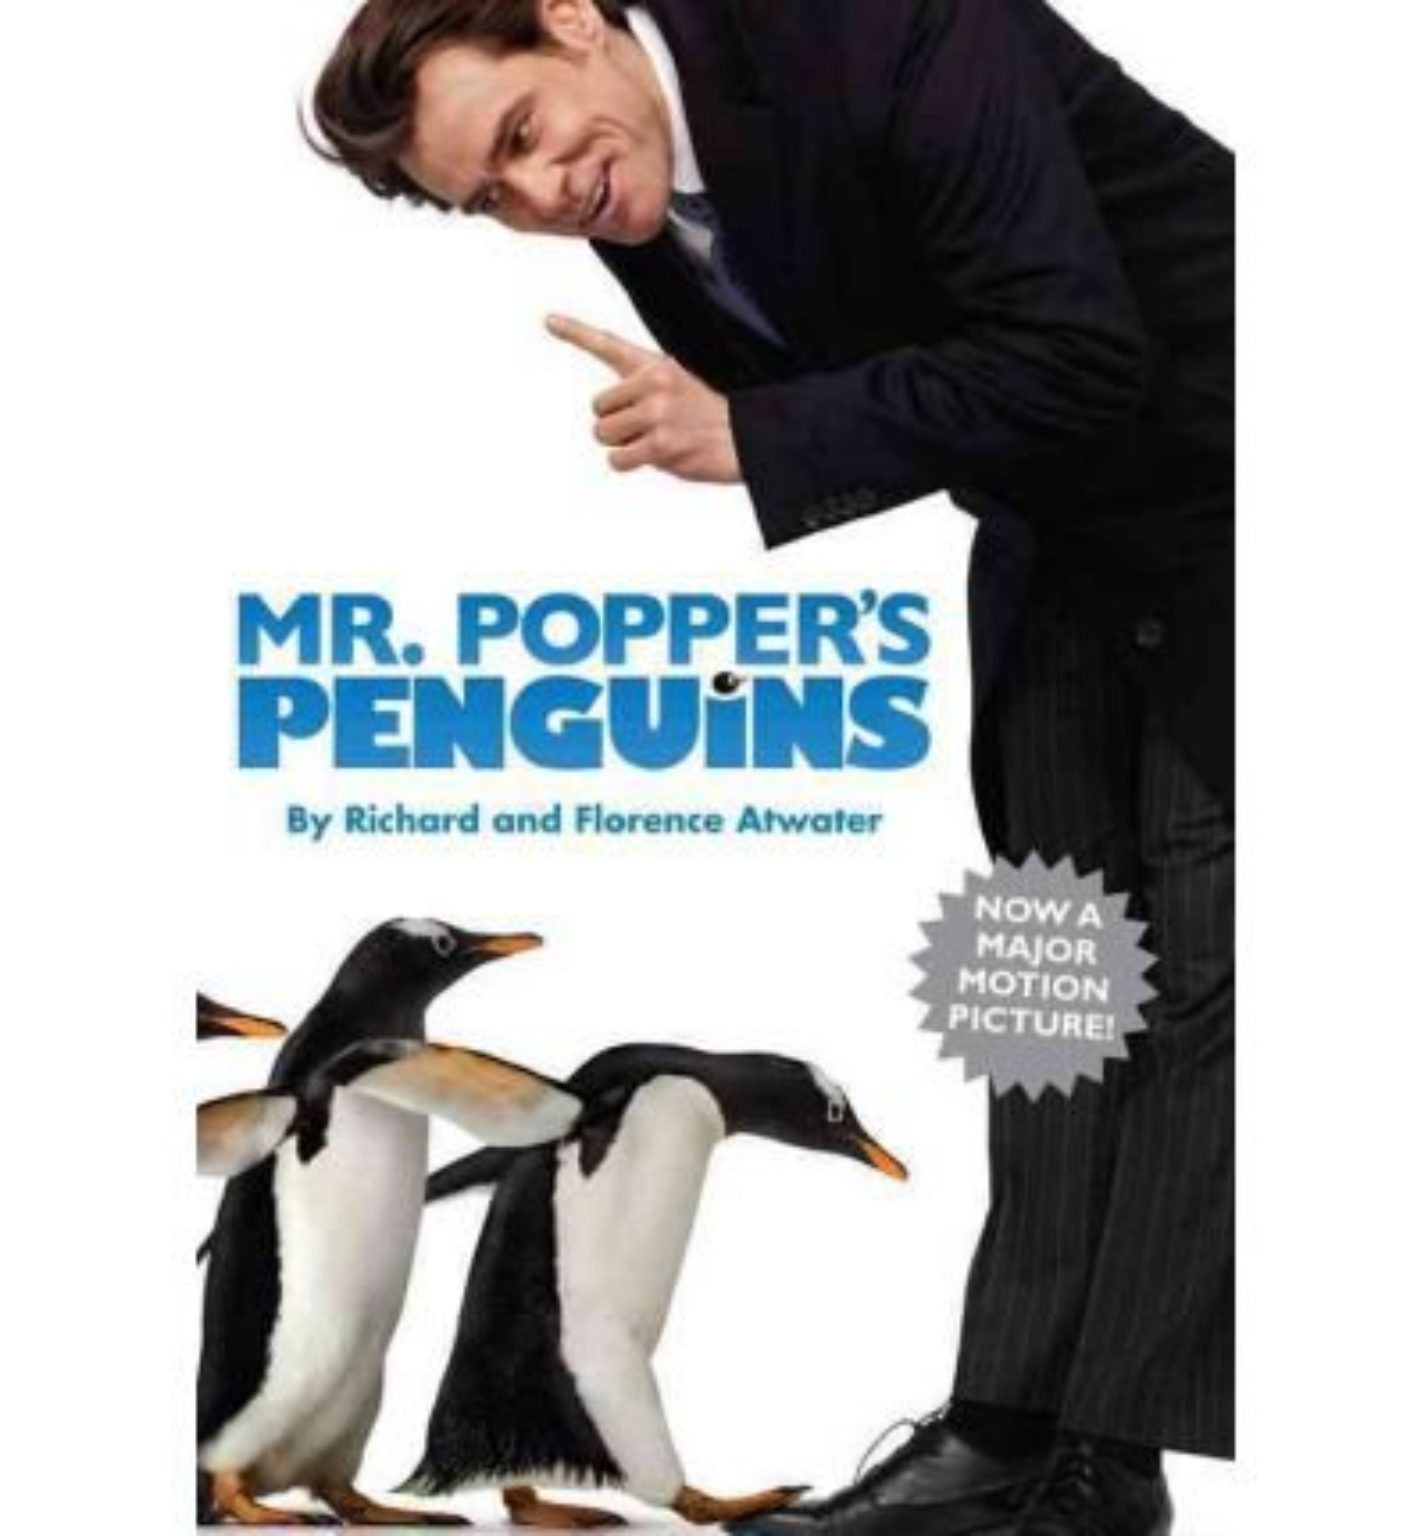 book report on mr popper's penguins